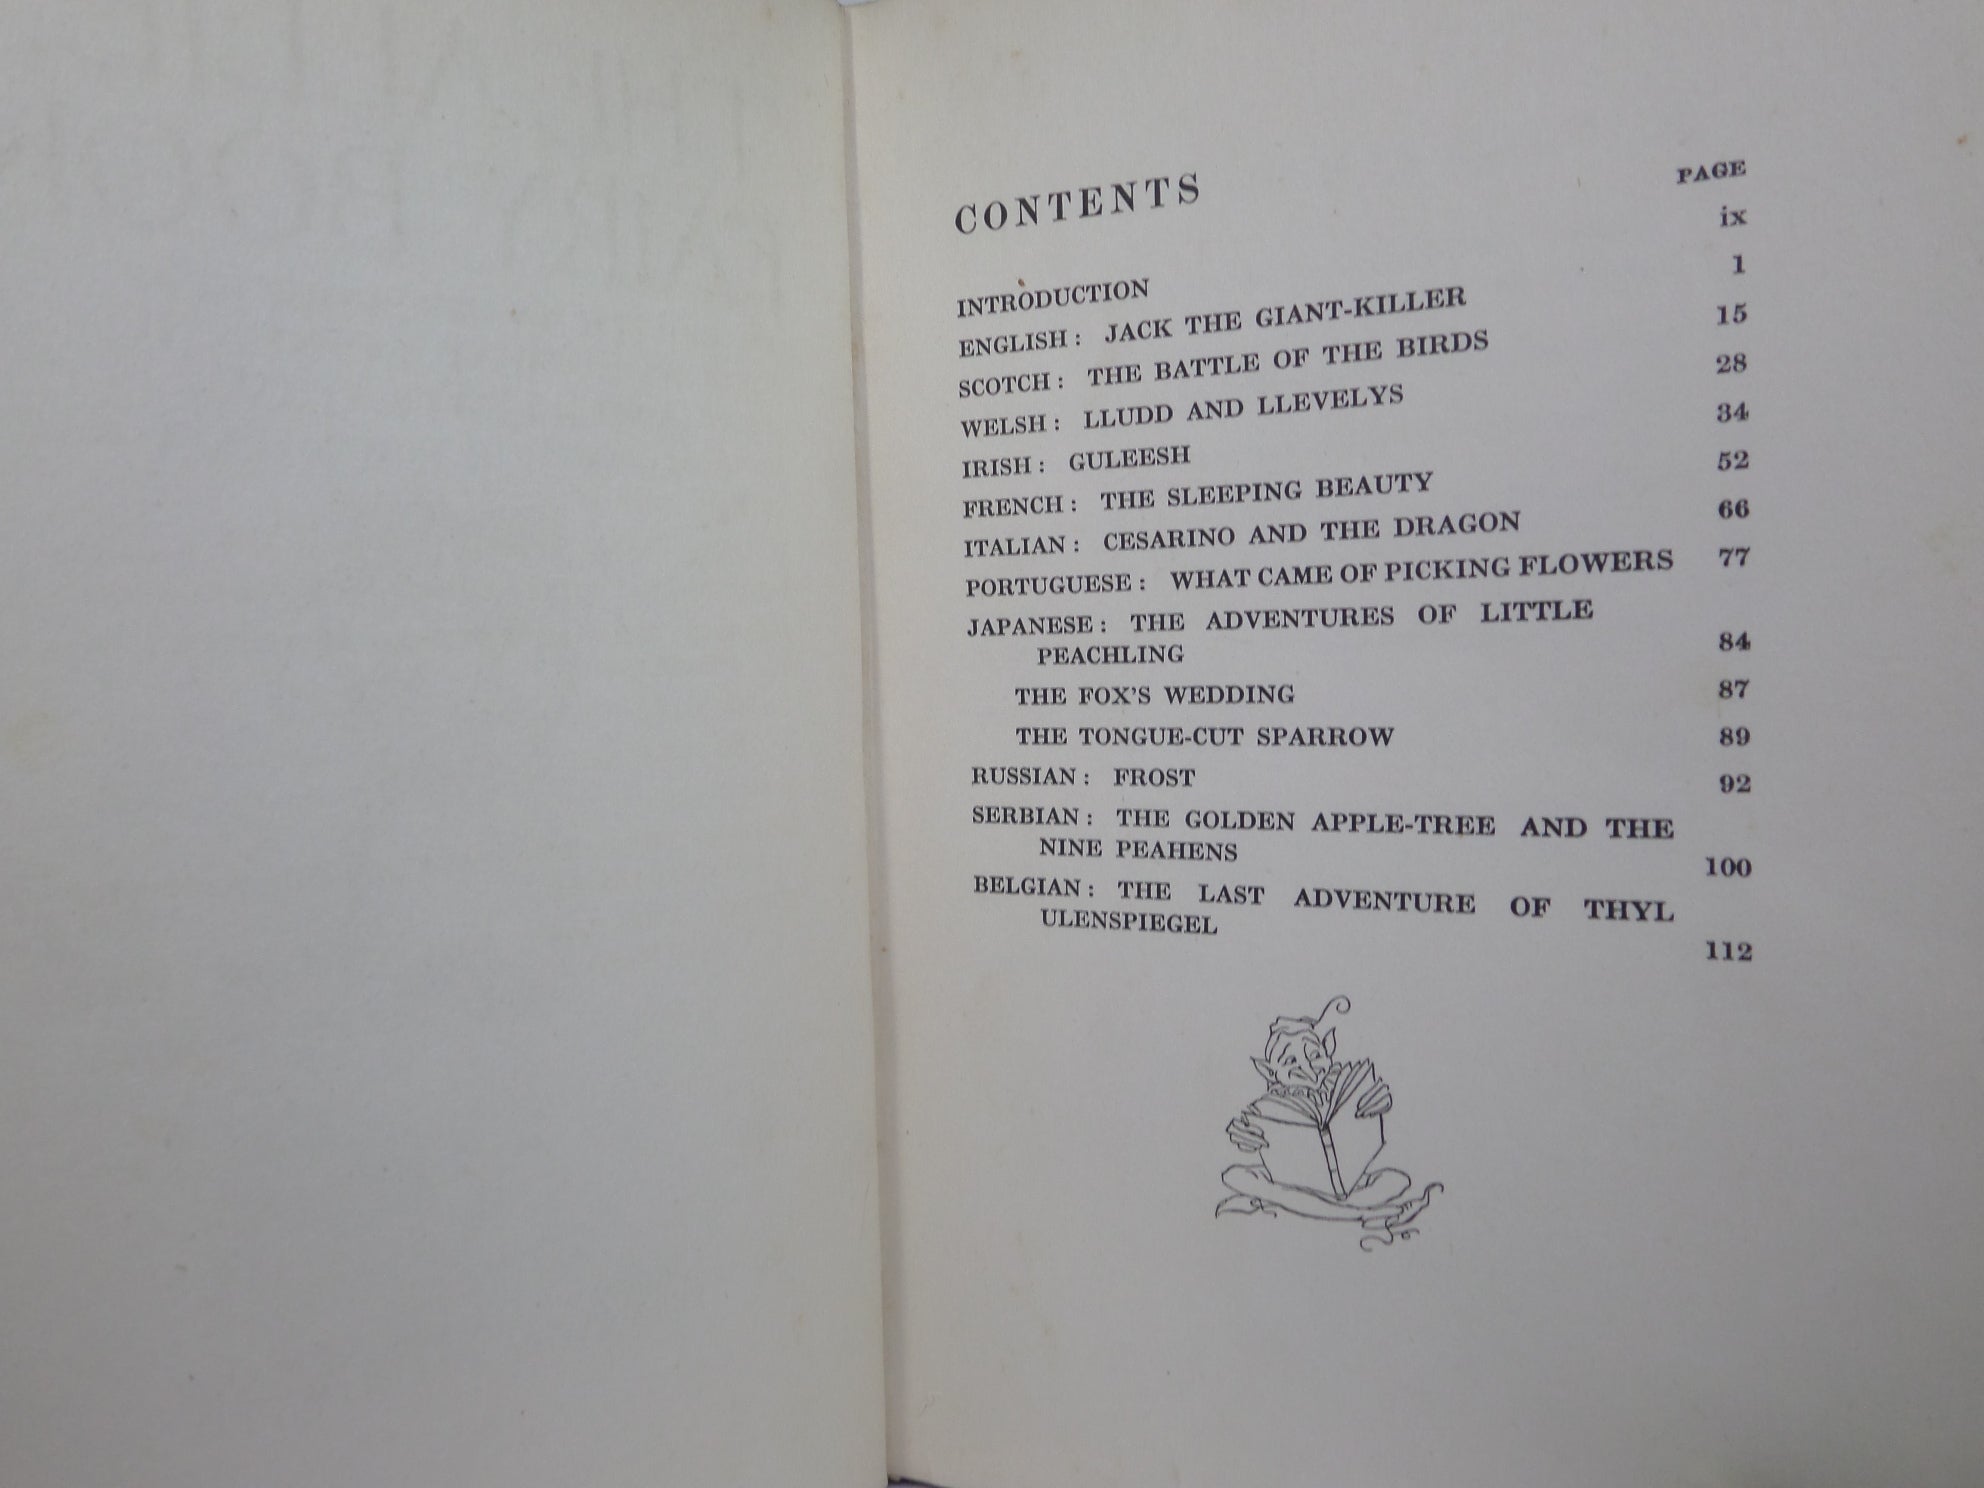 THE ALLIES' FAIRY BOOK 1916 ILLUSTRATED BY ARTHUR RACKHAM